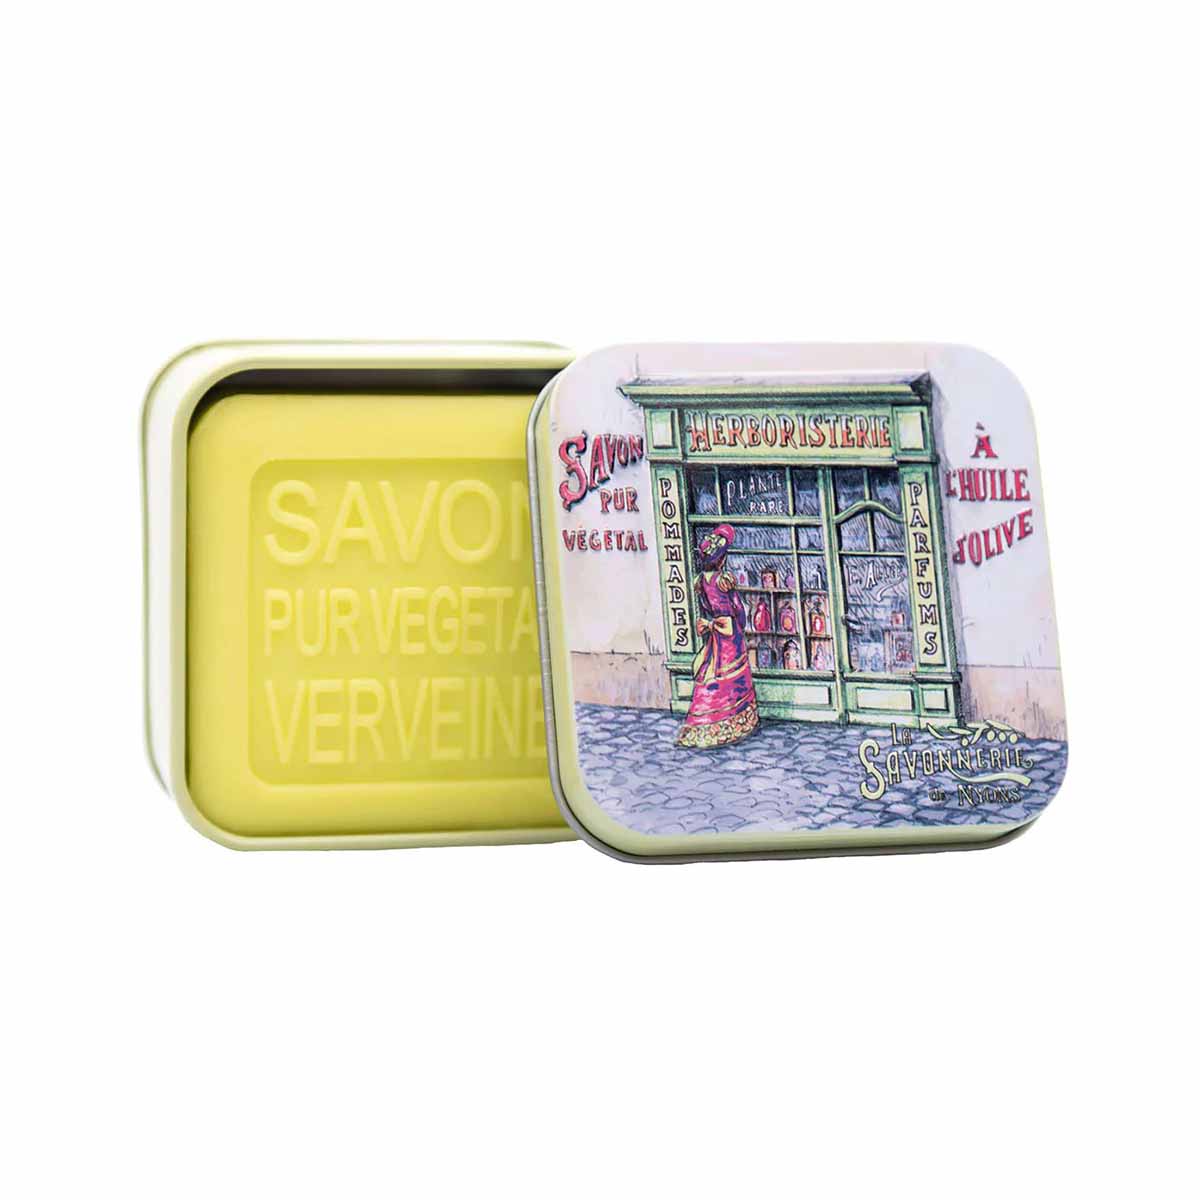 La Savonnerie de Nyons Metal box "Herbalist" and Soap 100g 